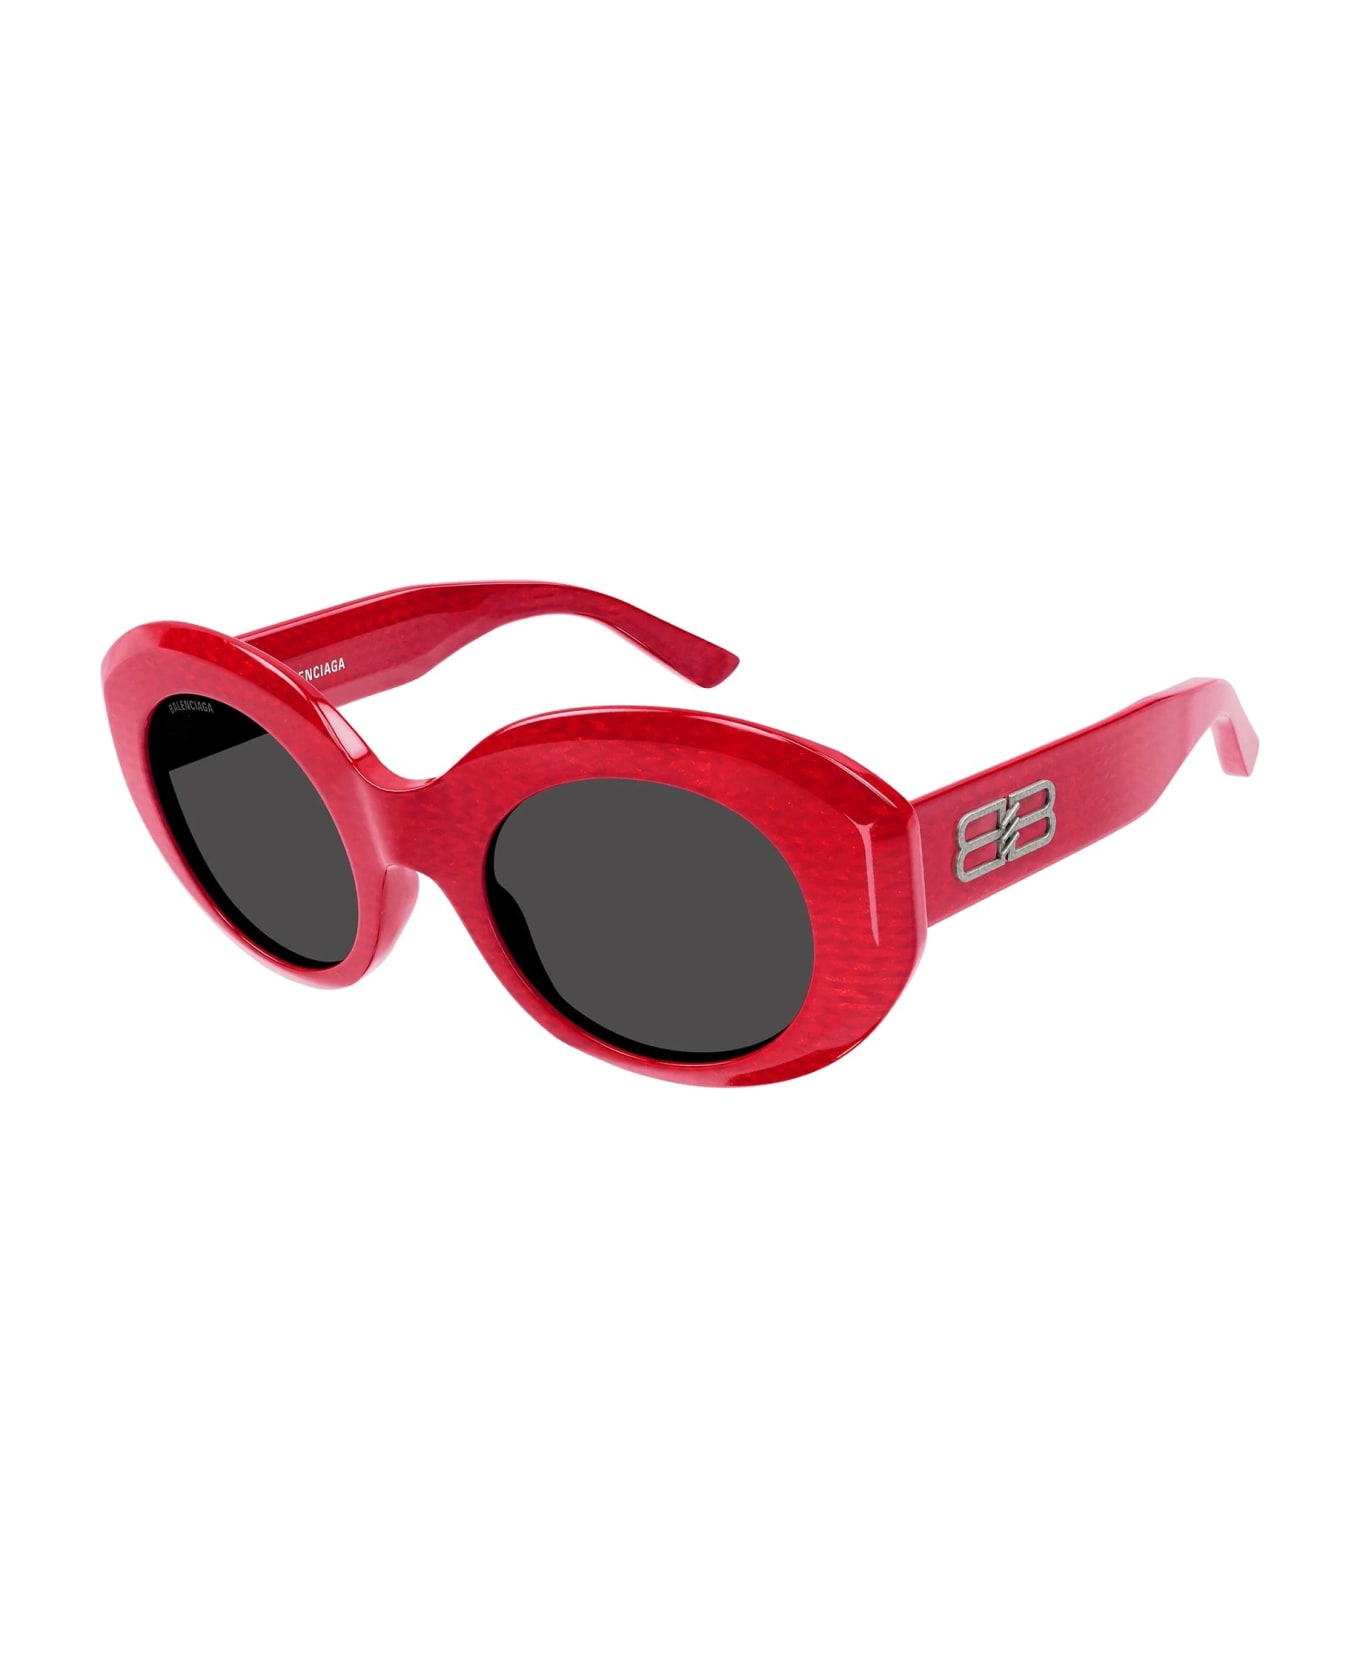 Balenciaga Eyewear Bb0235s-003 - Red Sunglasses - red